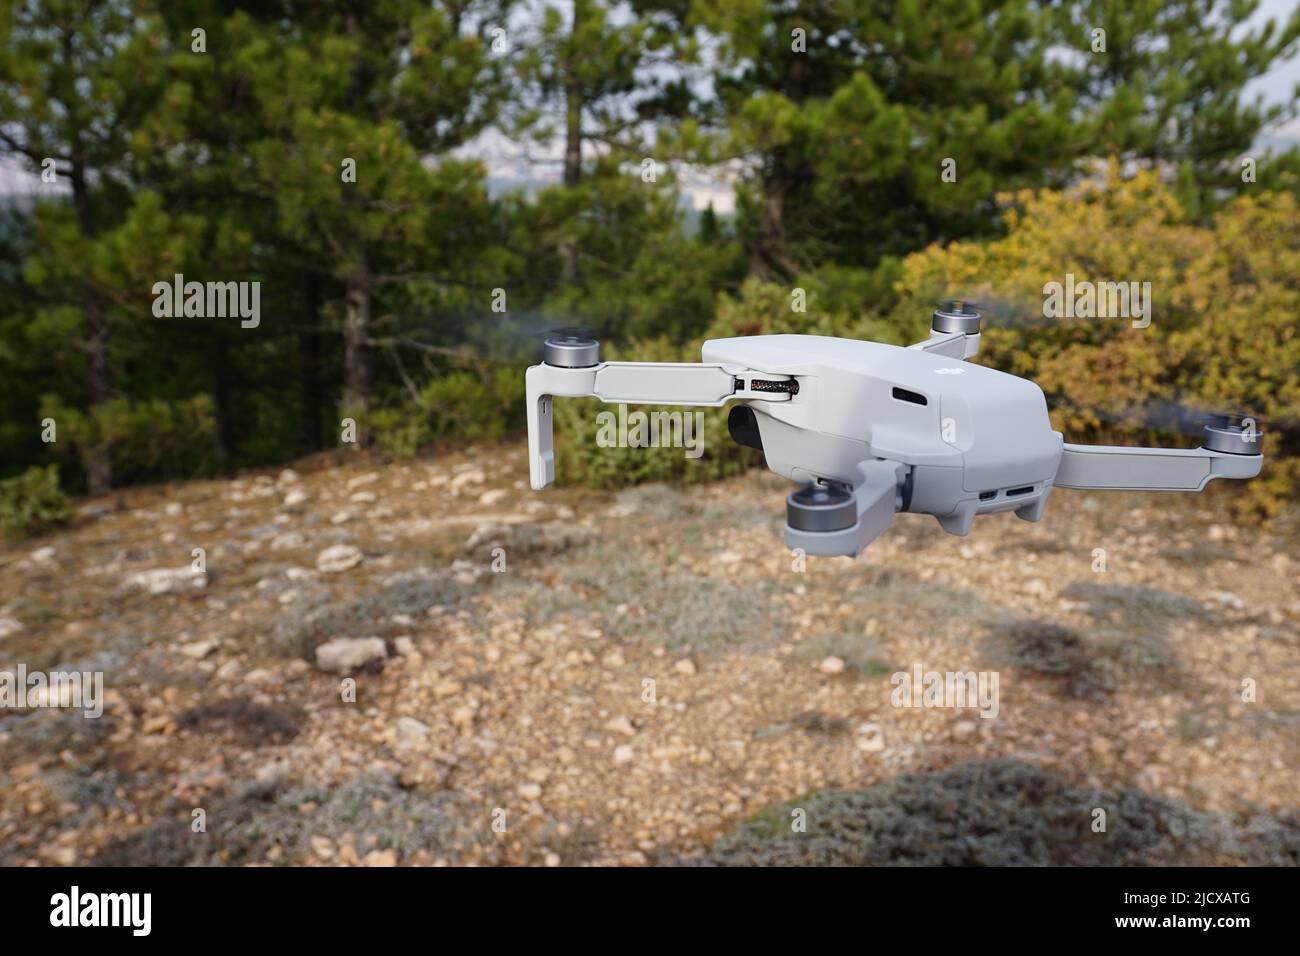 29 December 2020 Eskisehir Turkey. Dji Mavic Mini air drone in air close up  view Stock Photo - Alamy